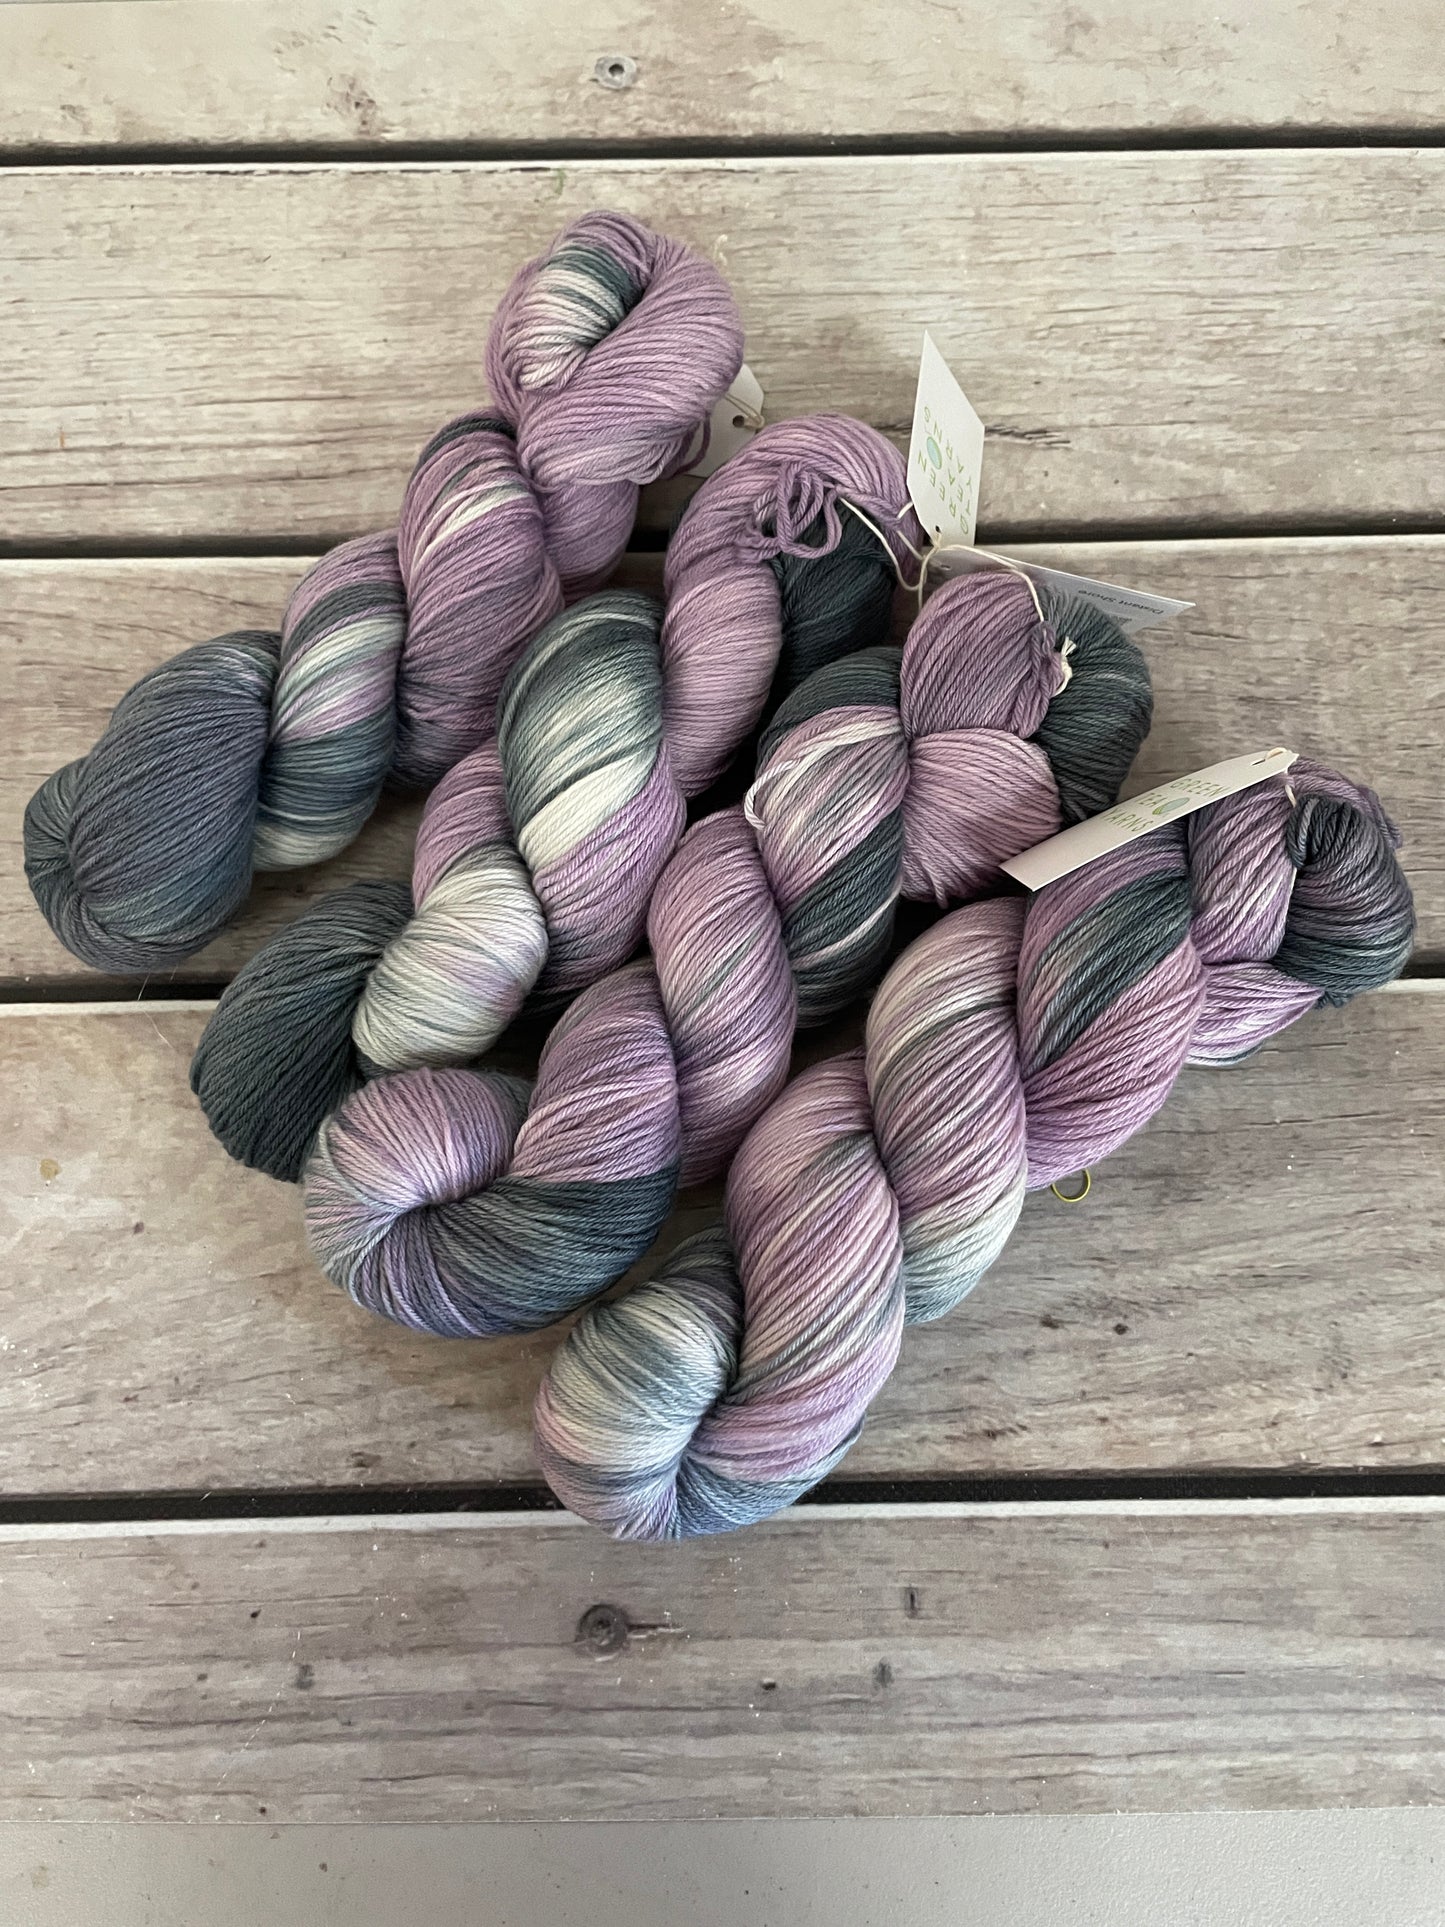 Distant Shore ooak - 4 ply sock yarn in merino and nylon - Darjeeling